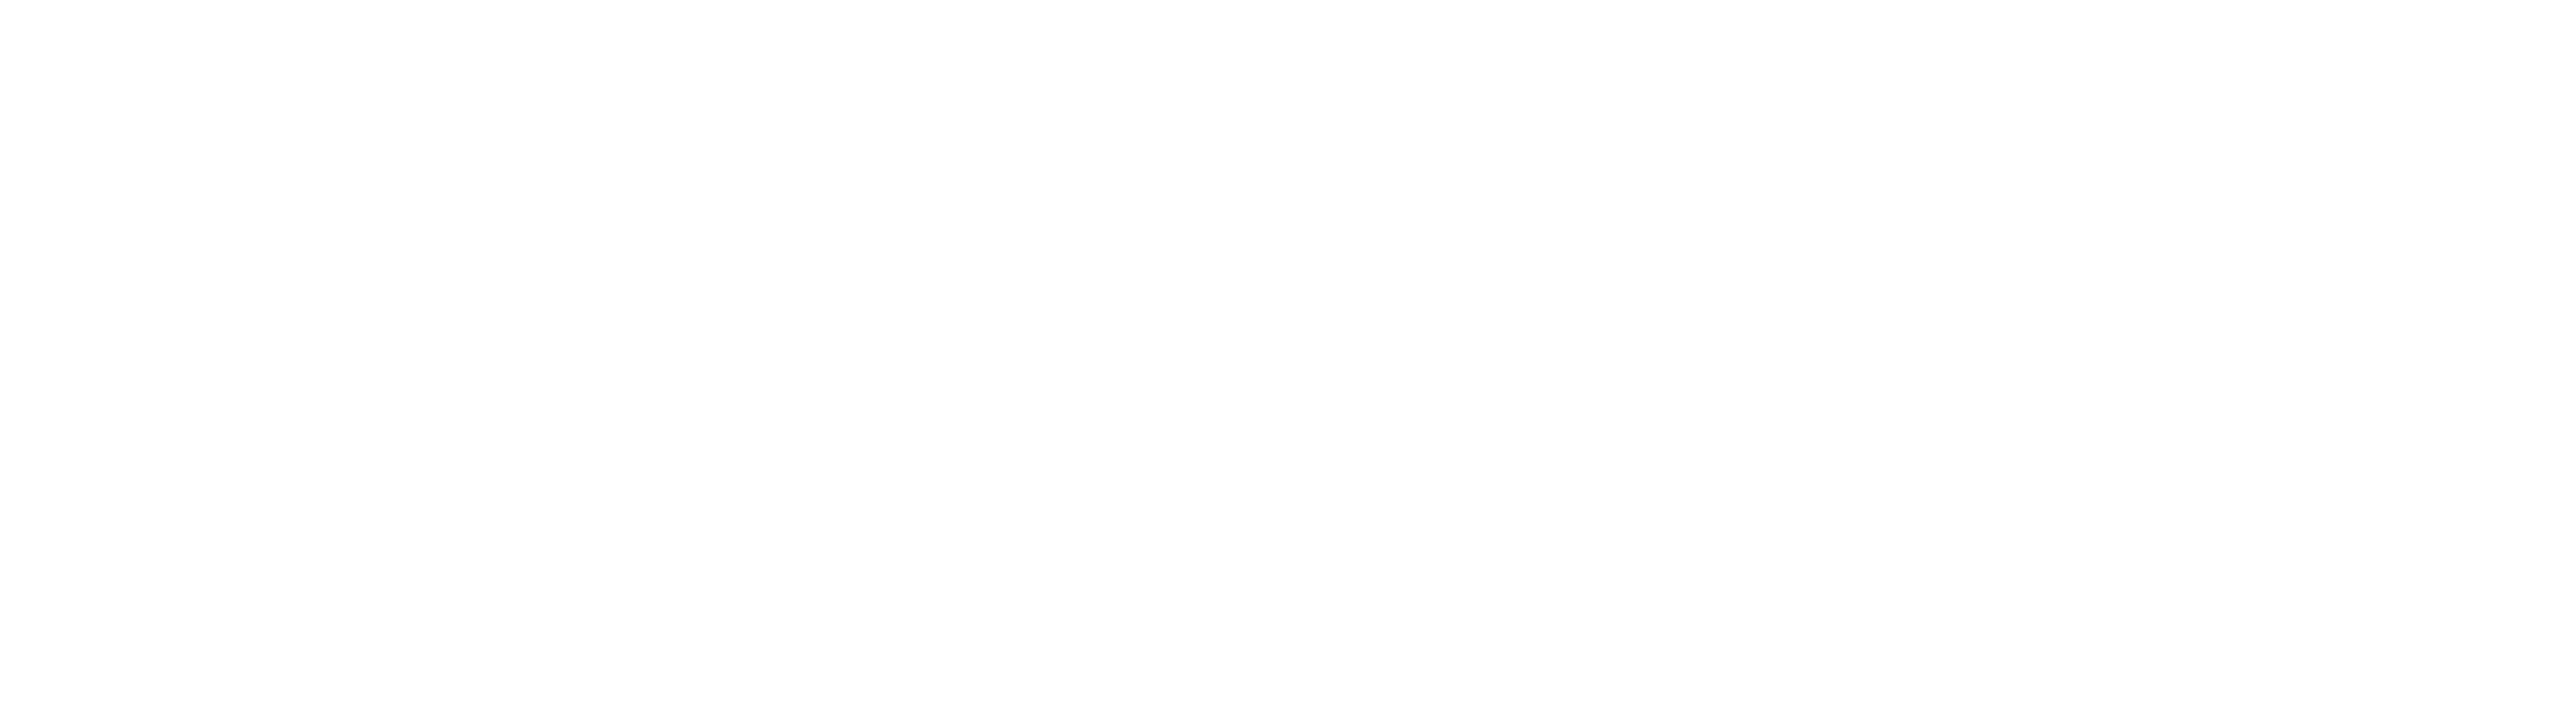 Sidetrain logo